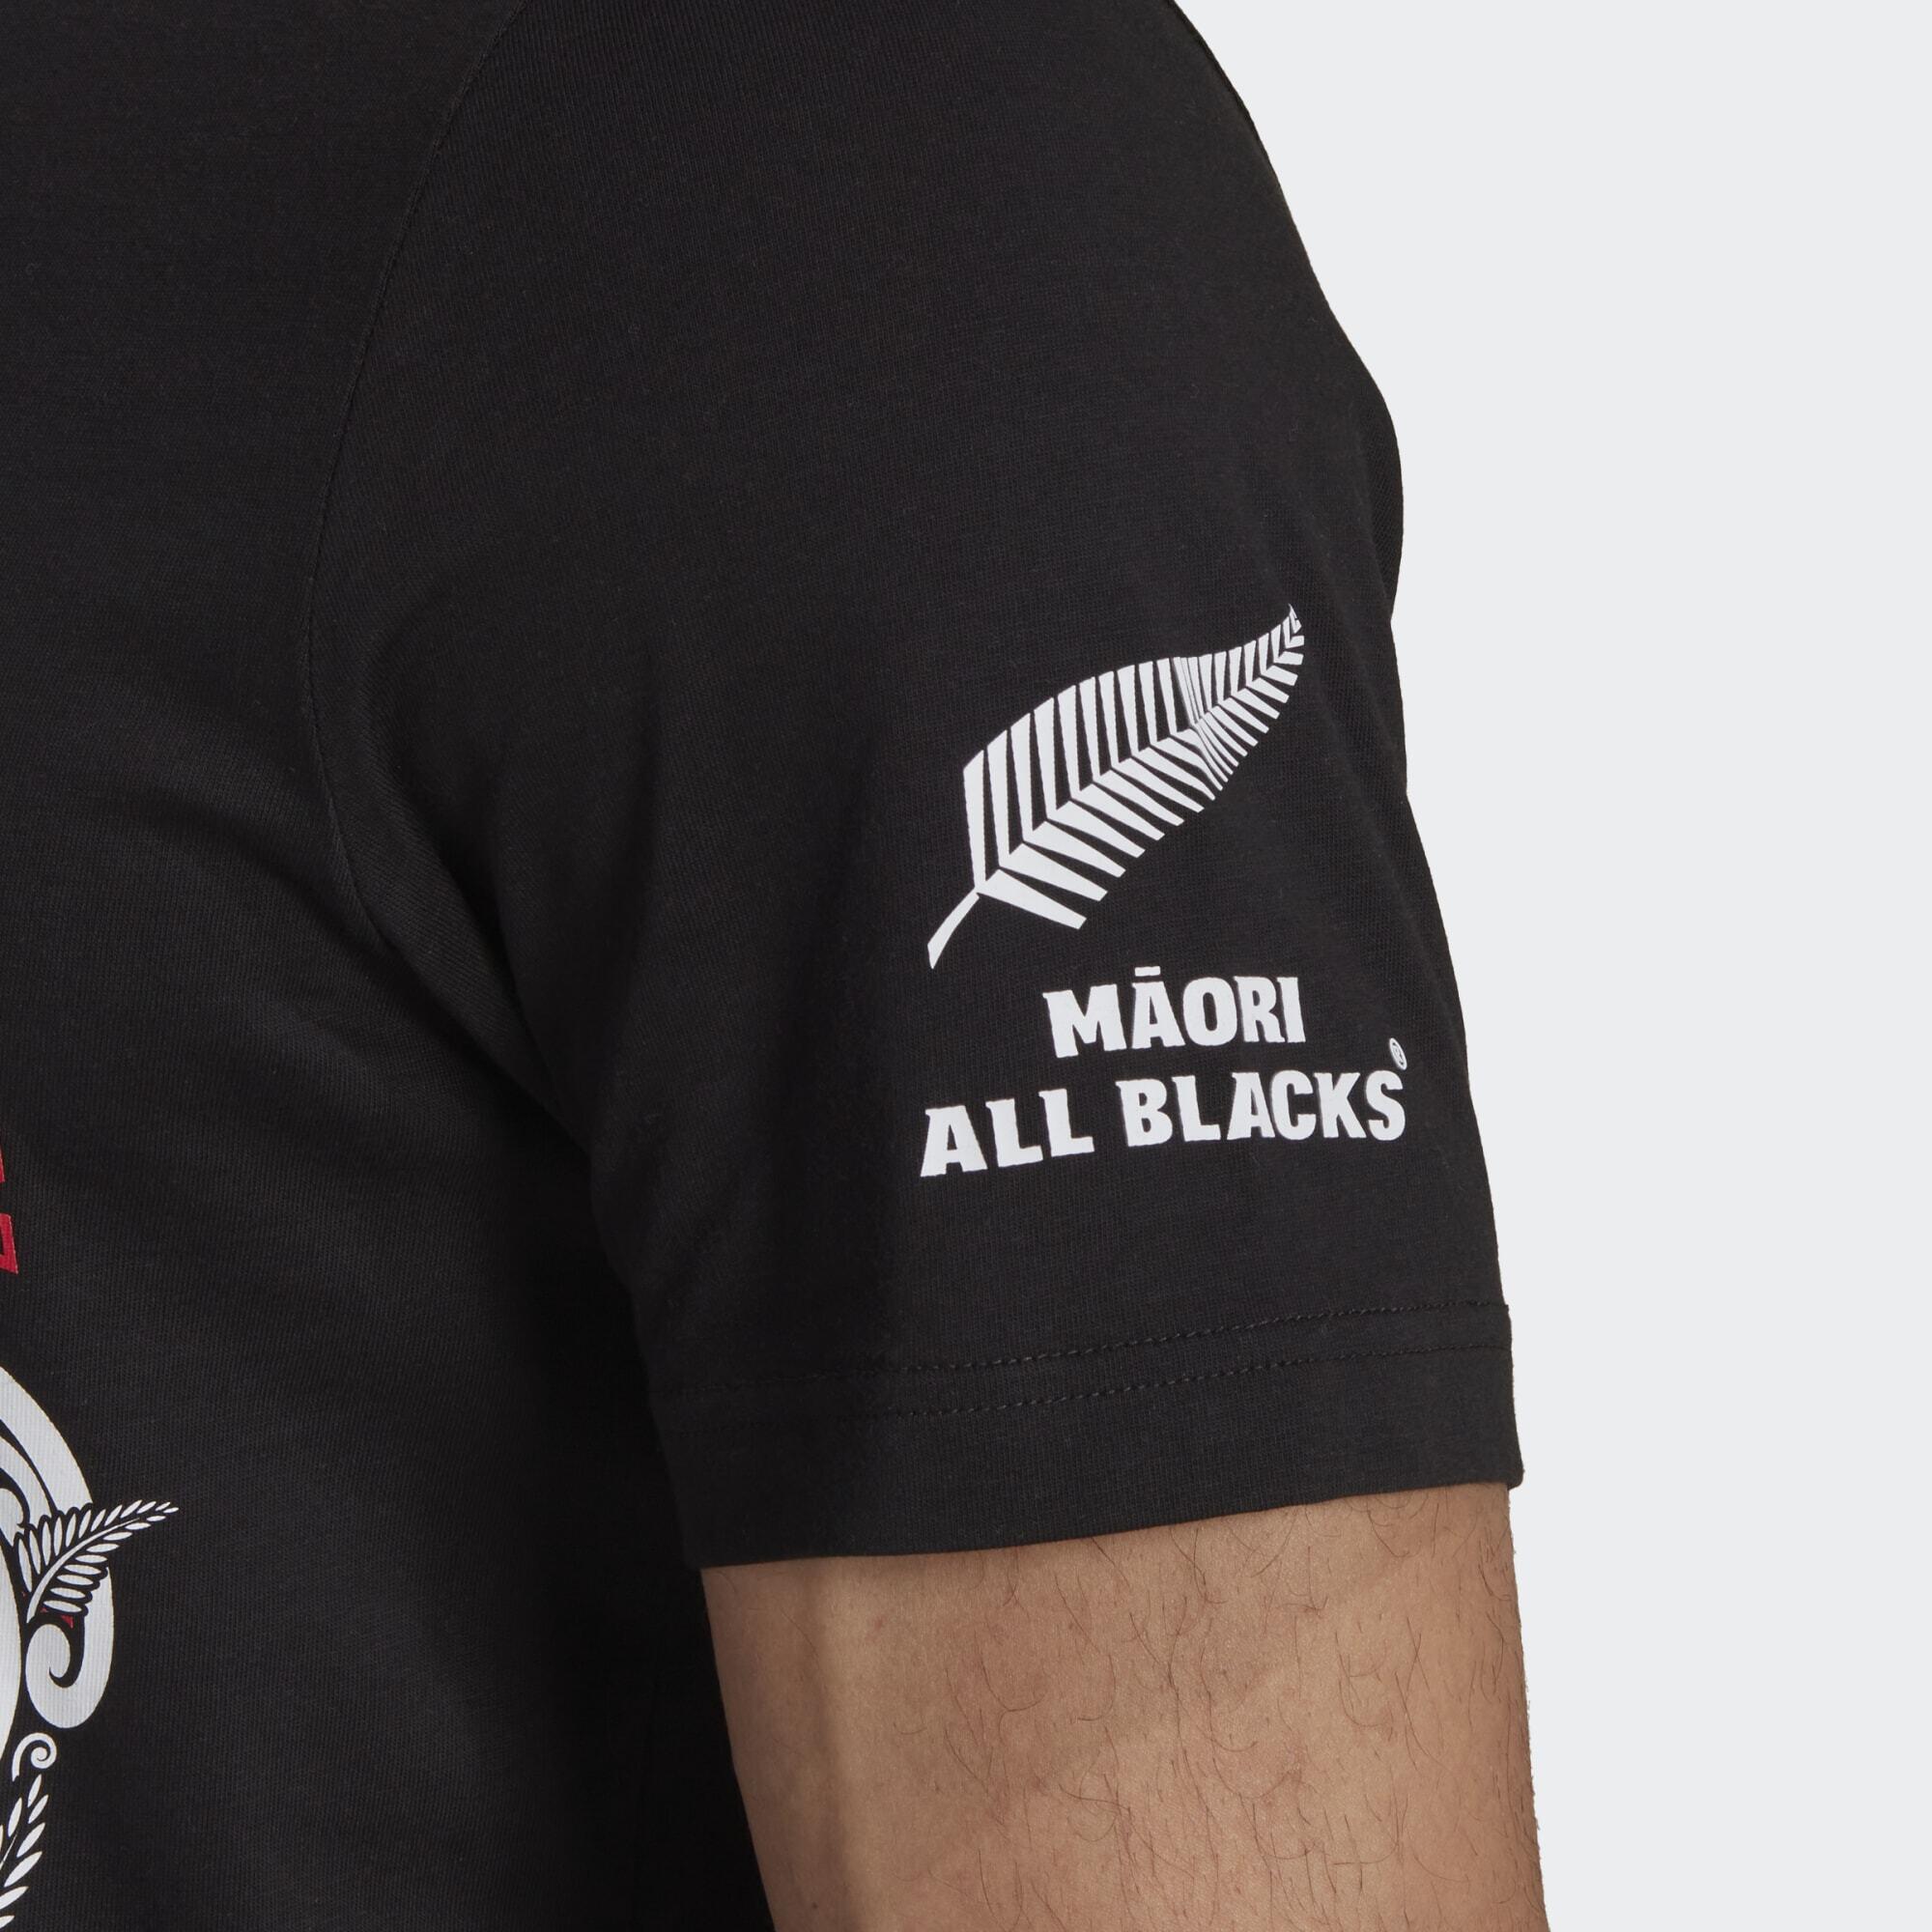 Maori All Blacks Rugby Graphic Tee 5/5